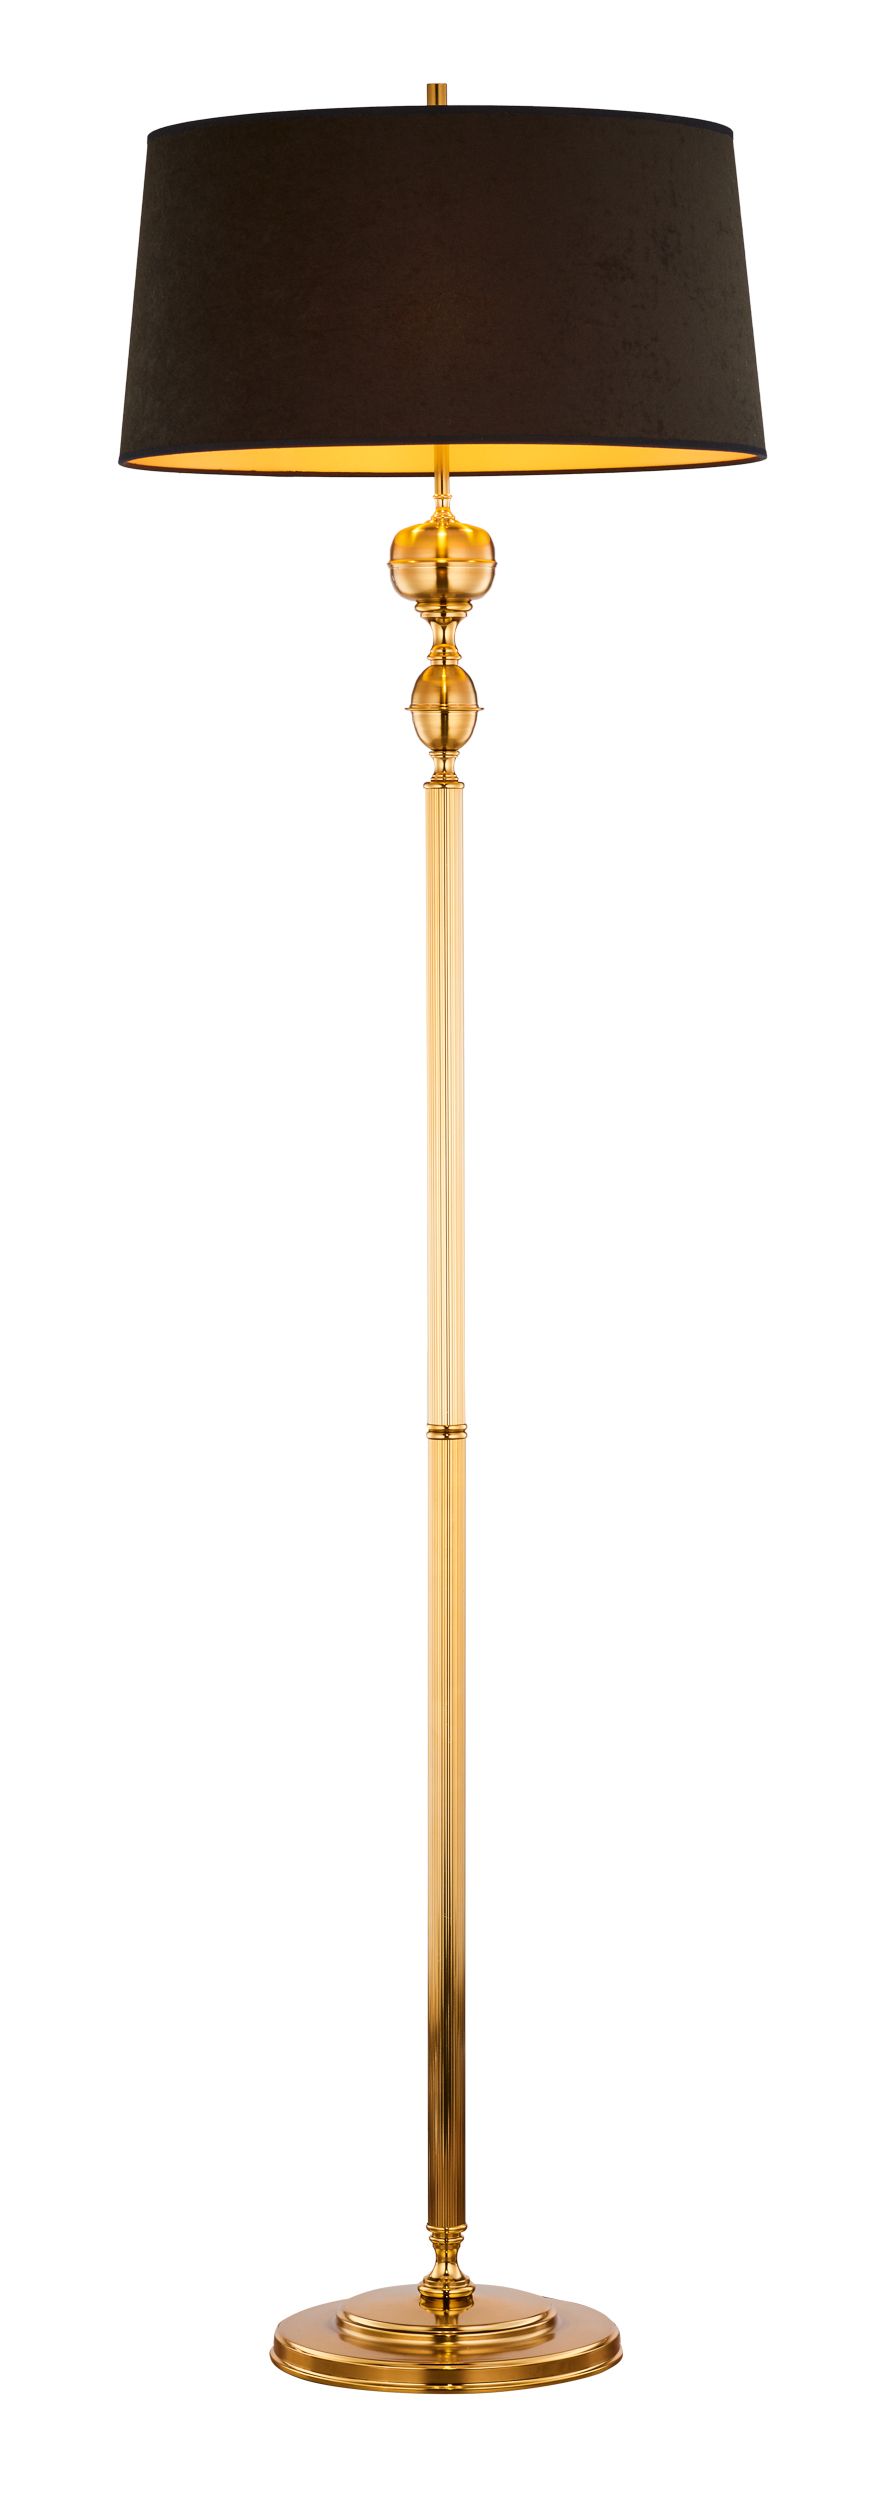 Blendarme Stehlampe Stoff Messing 177 cm in Gold Schwarz